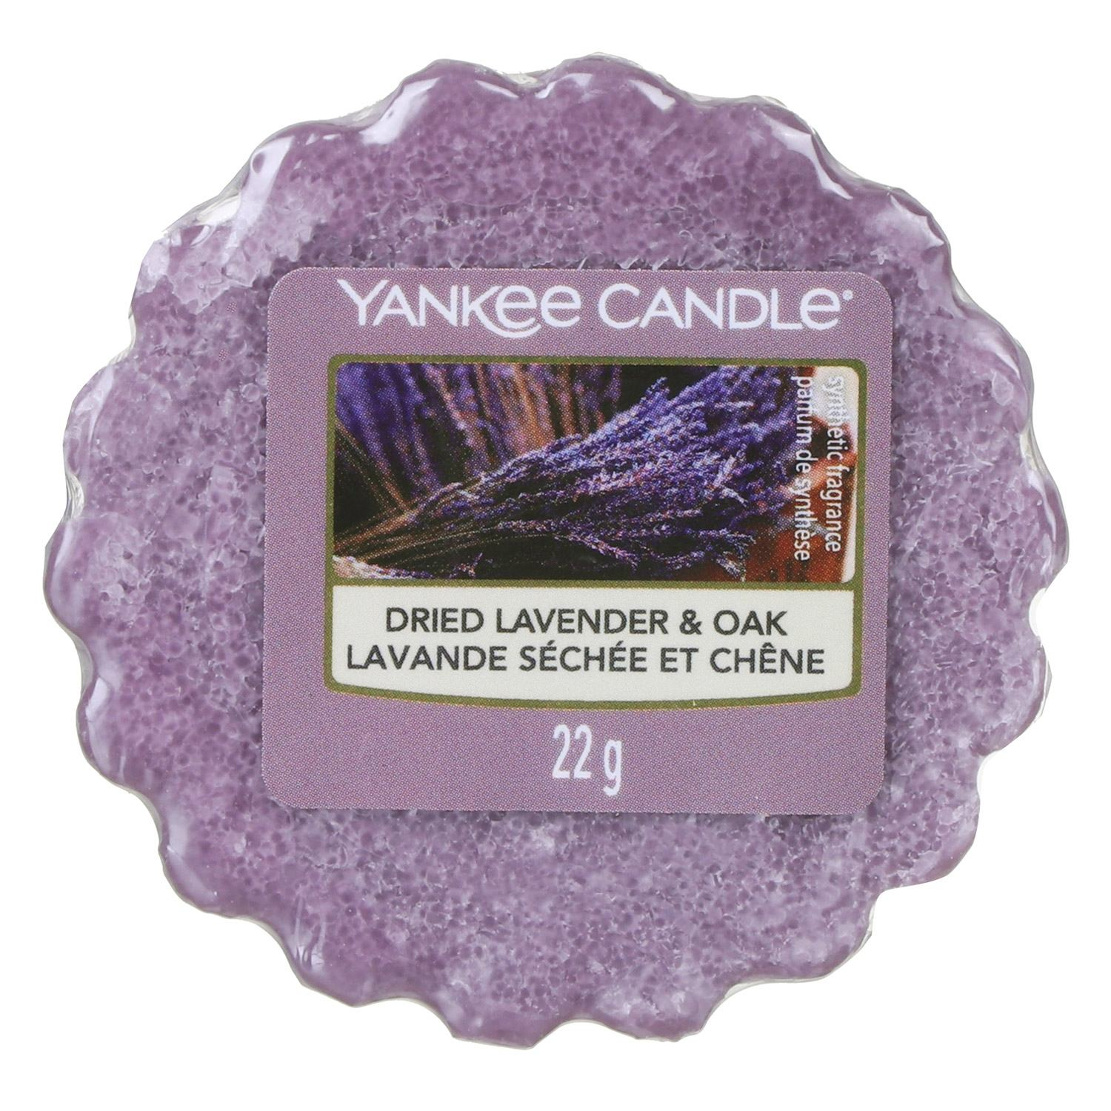 Yankee Candle Dried Lavender & Oak Wax Melt Tart